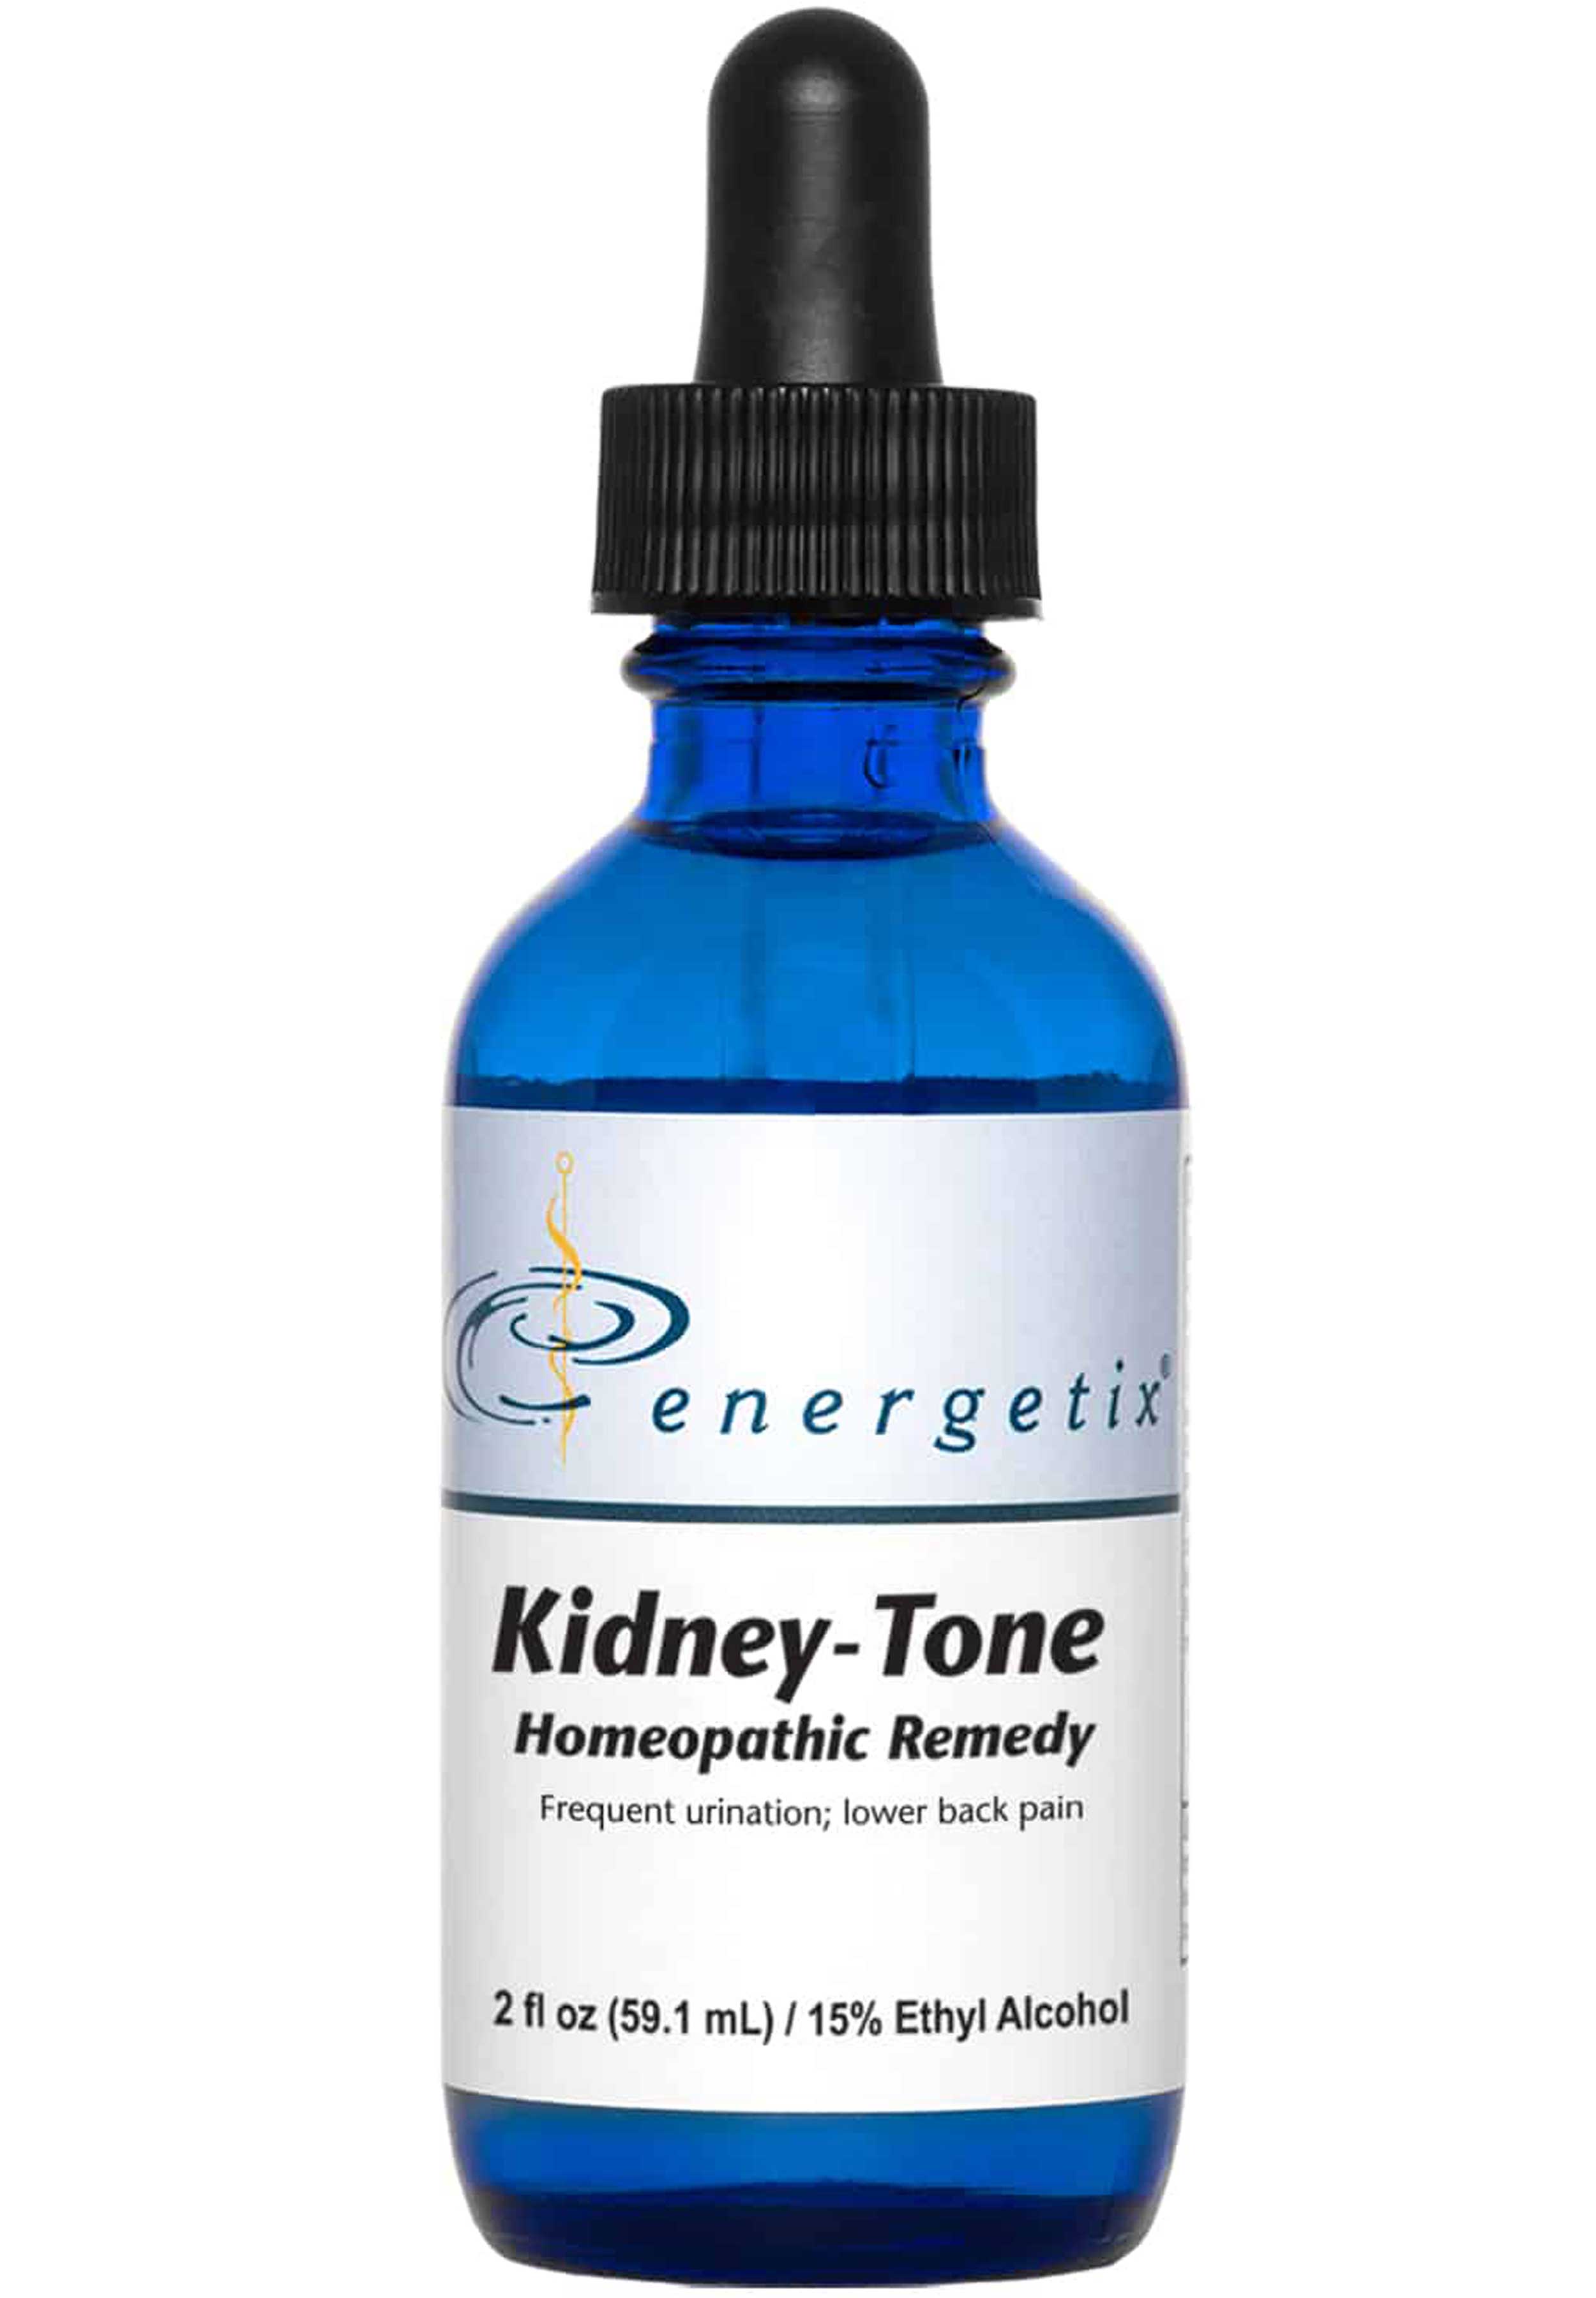 Energetix Kidney-Tone